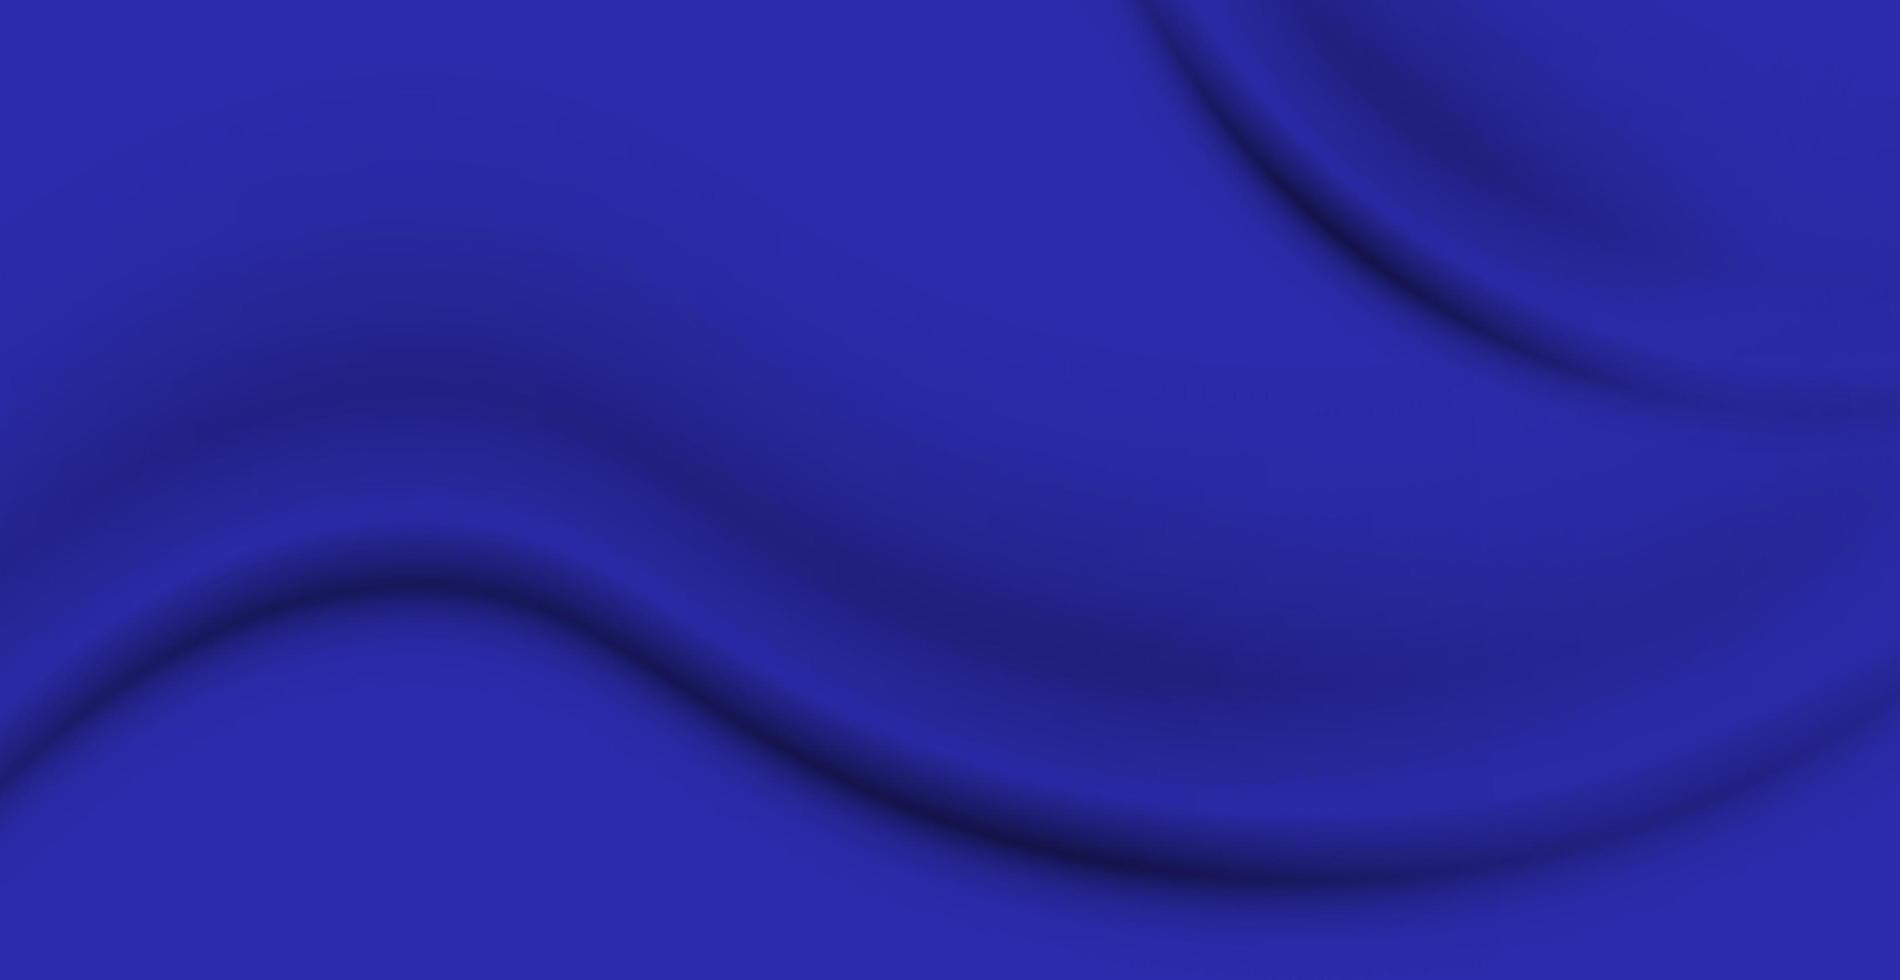 fondo de textura de tela azul arrugada realista, pliegues - vector